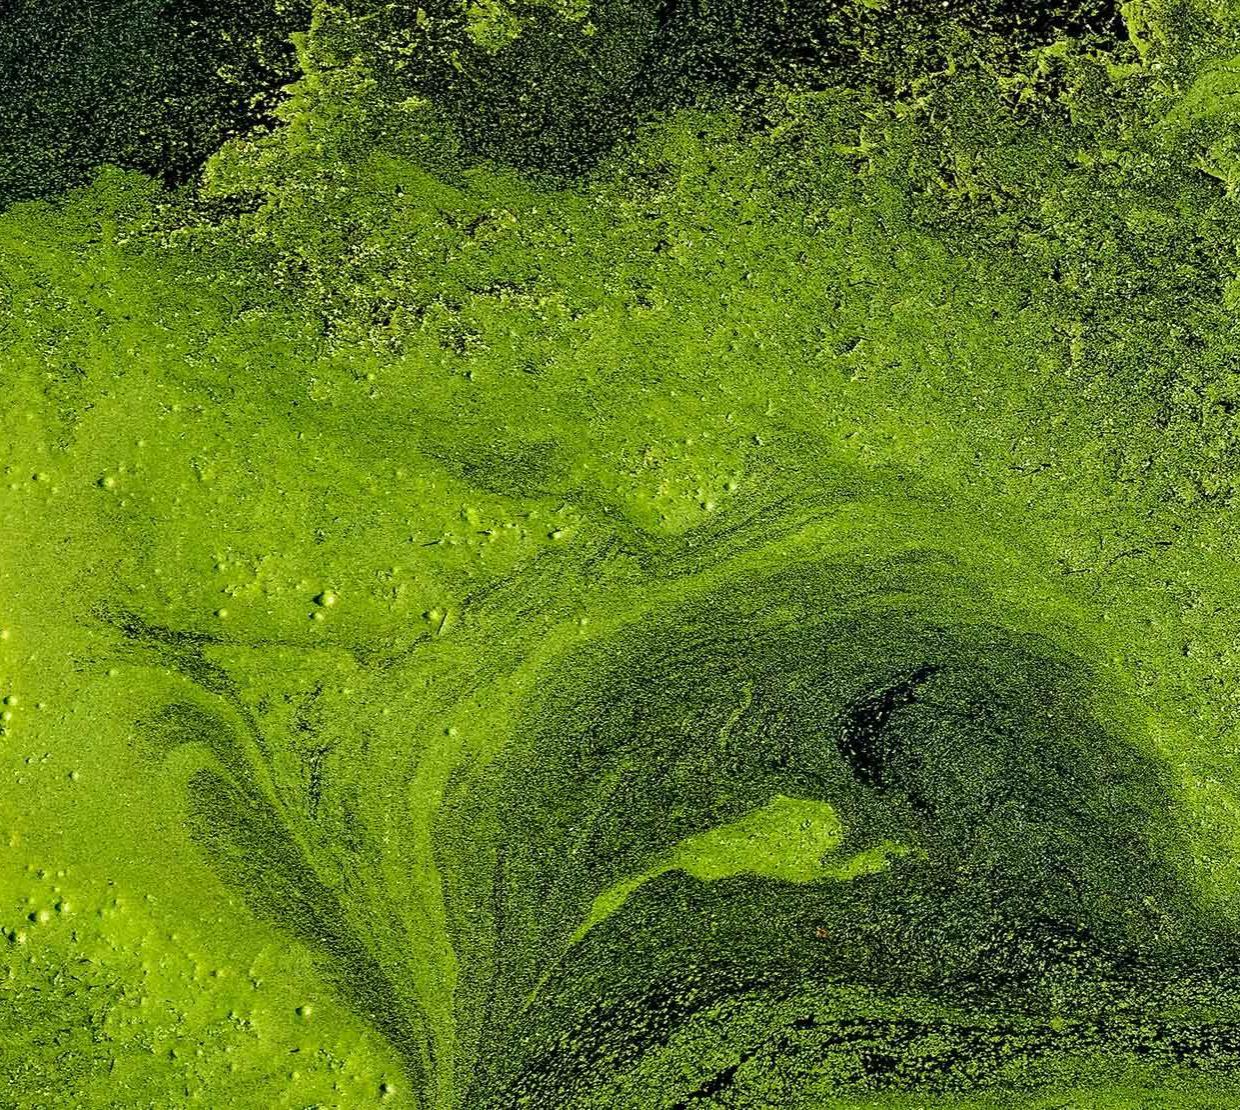 Image of algal bloom